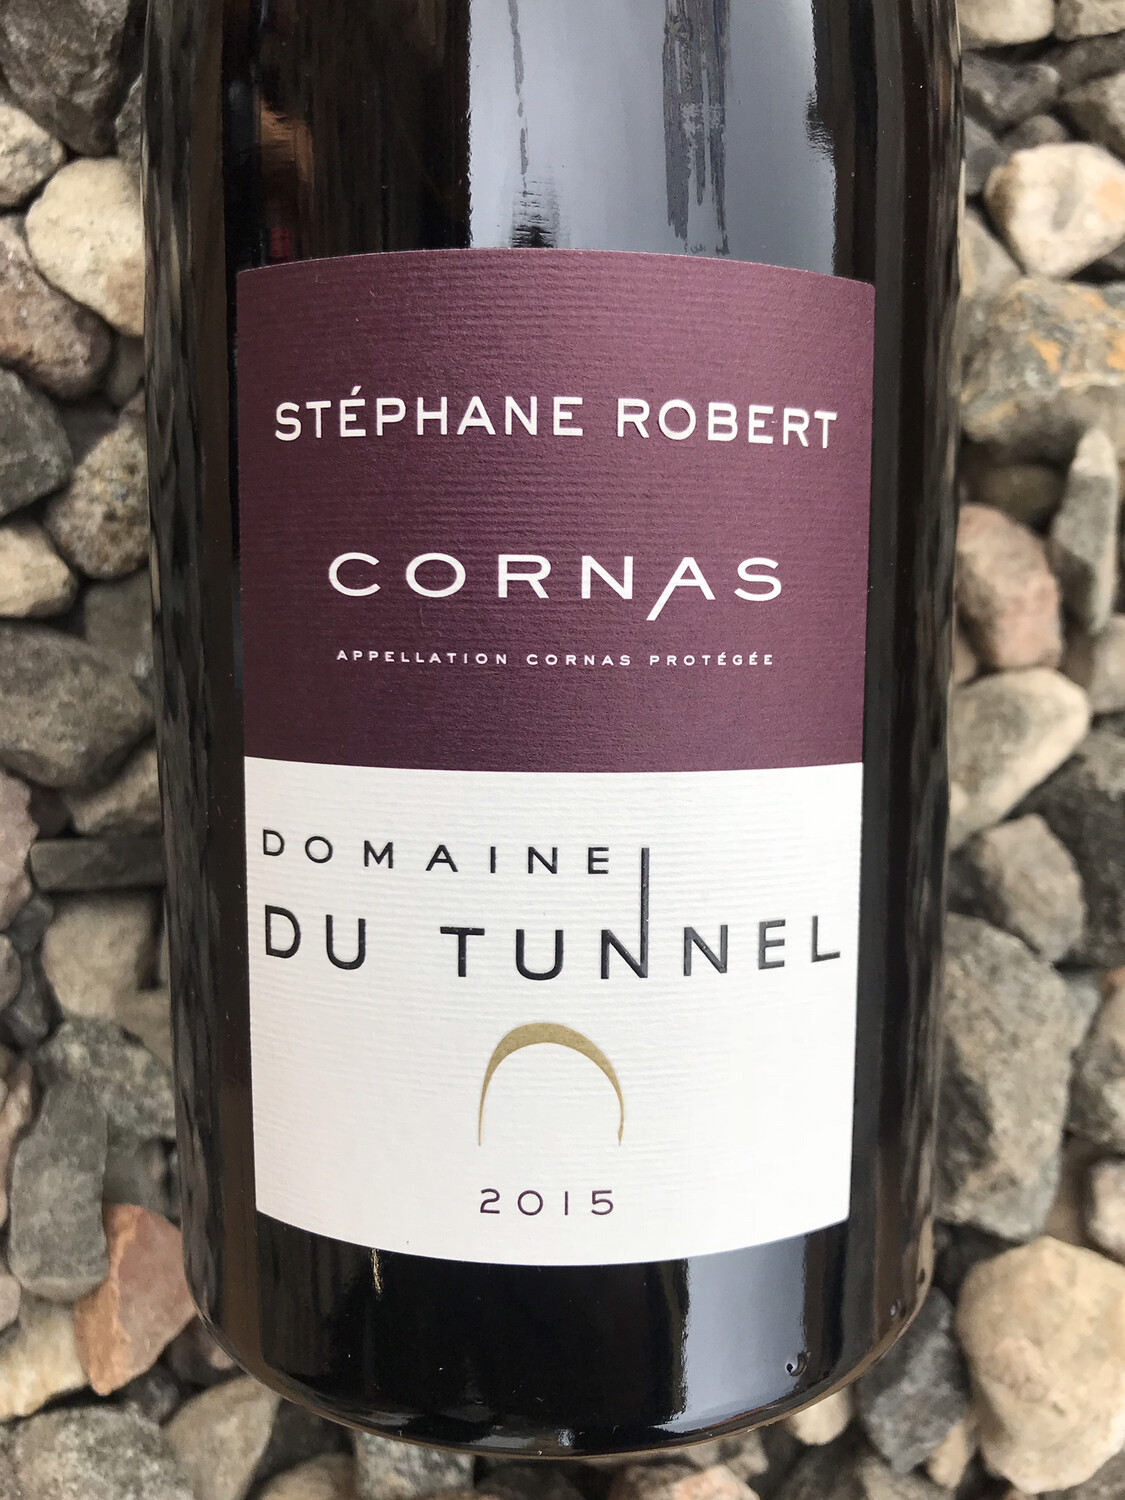 Domaine du Tunnel Cornas 2015